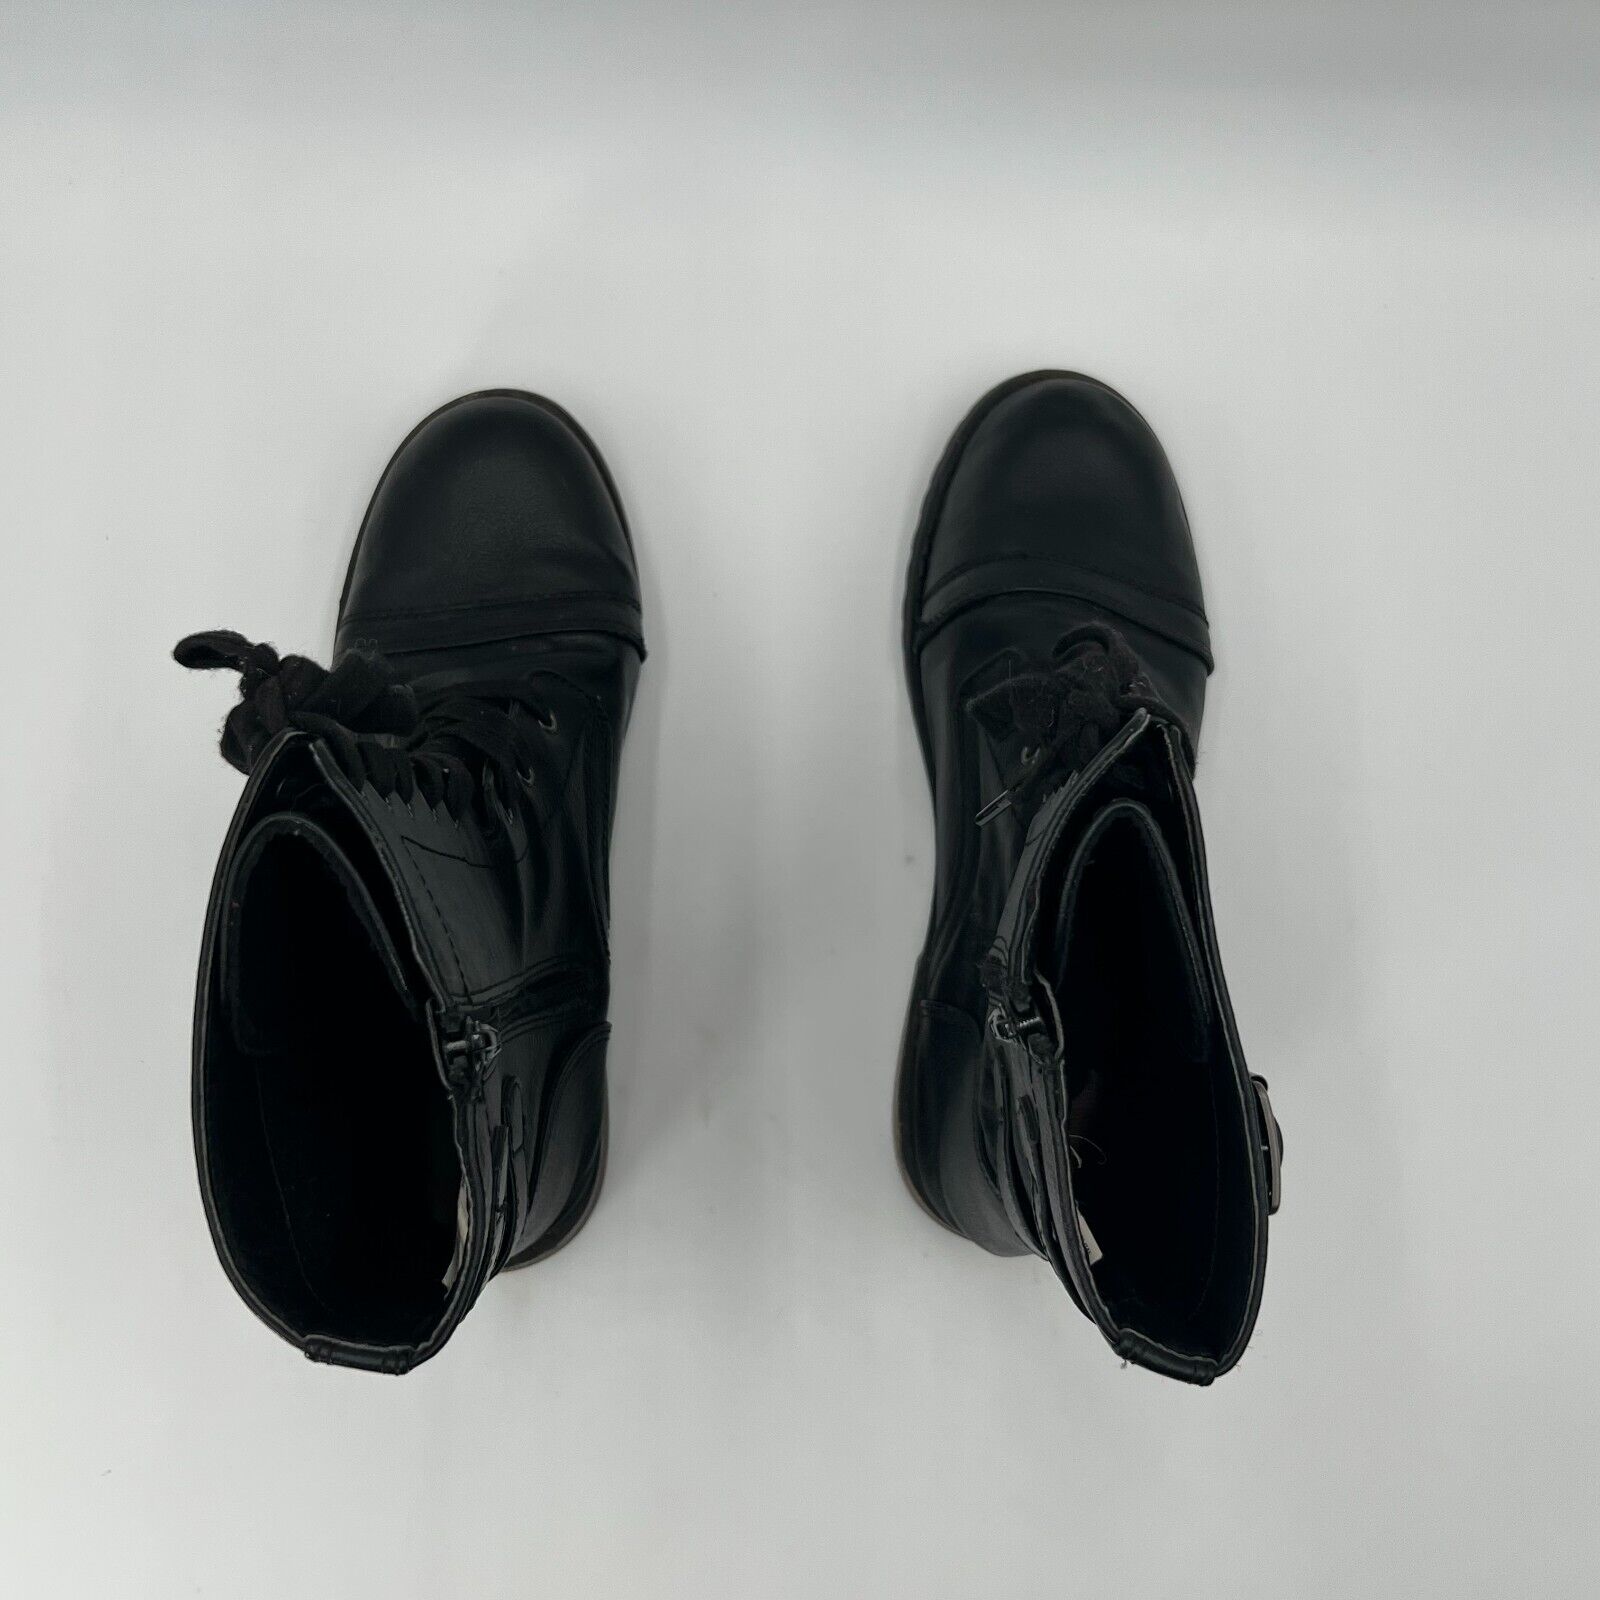 Self Esteem Metro Games Black Combat Boots Lace Up Zipper Buckles Women's Size 8